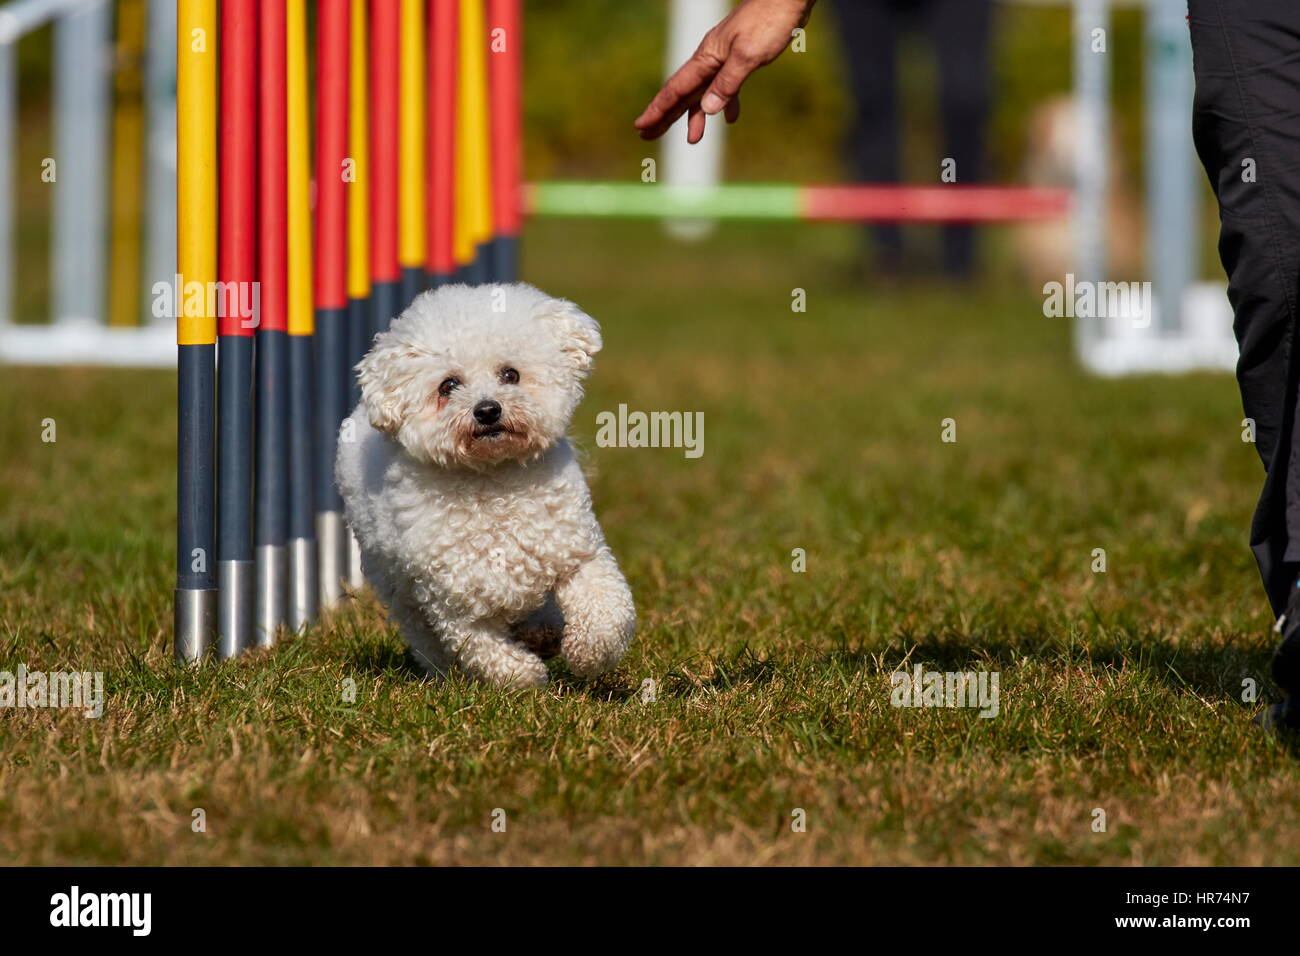 Bichon à poil frisé doing the slalom in dog agility trial Stock Photo